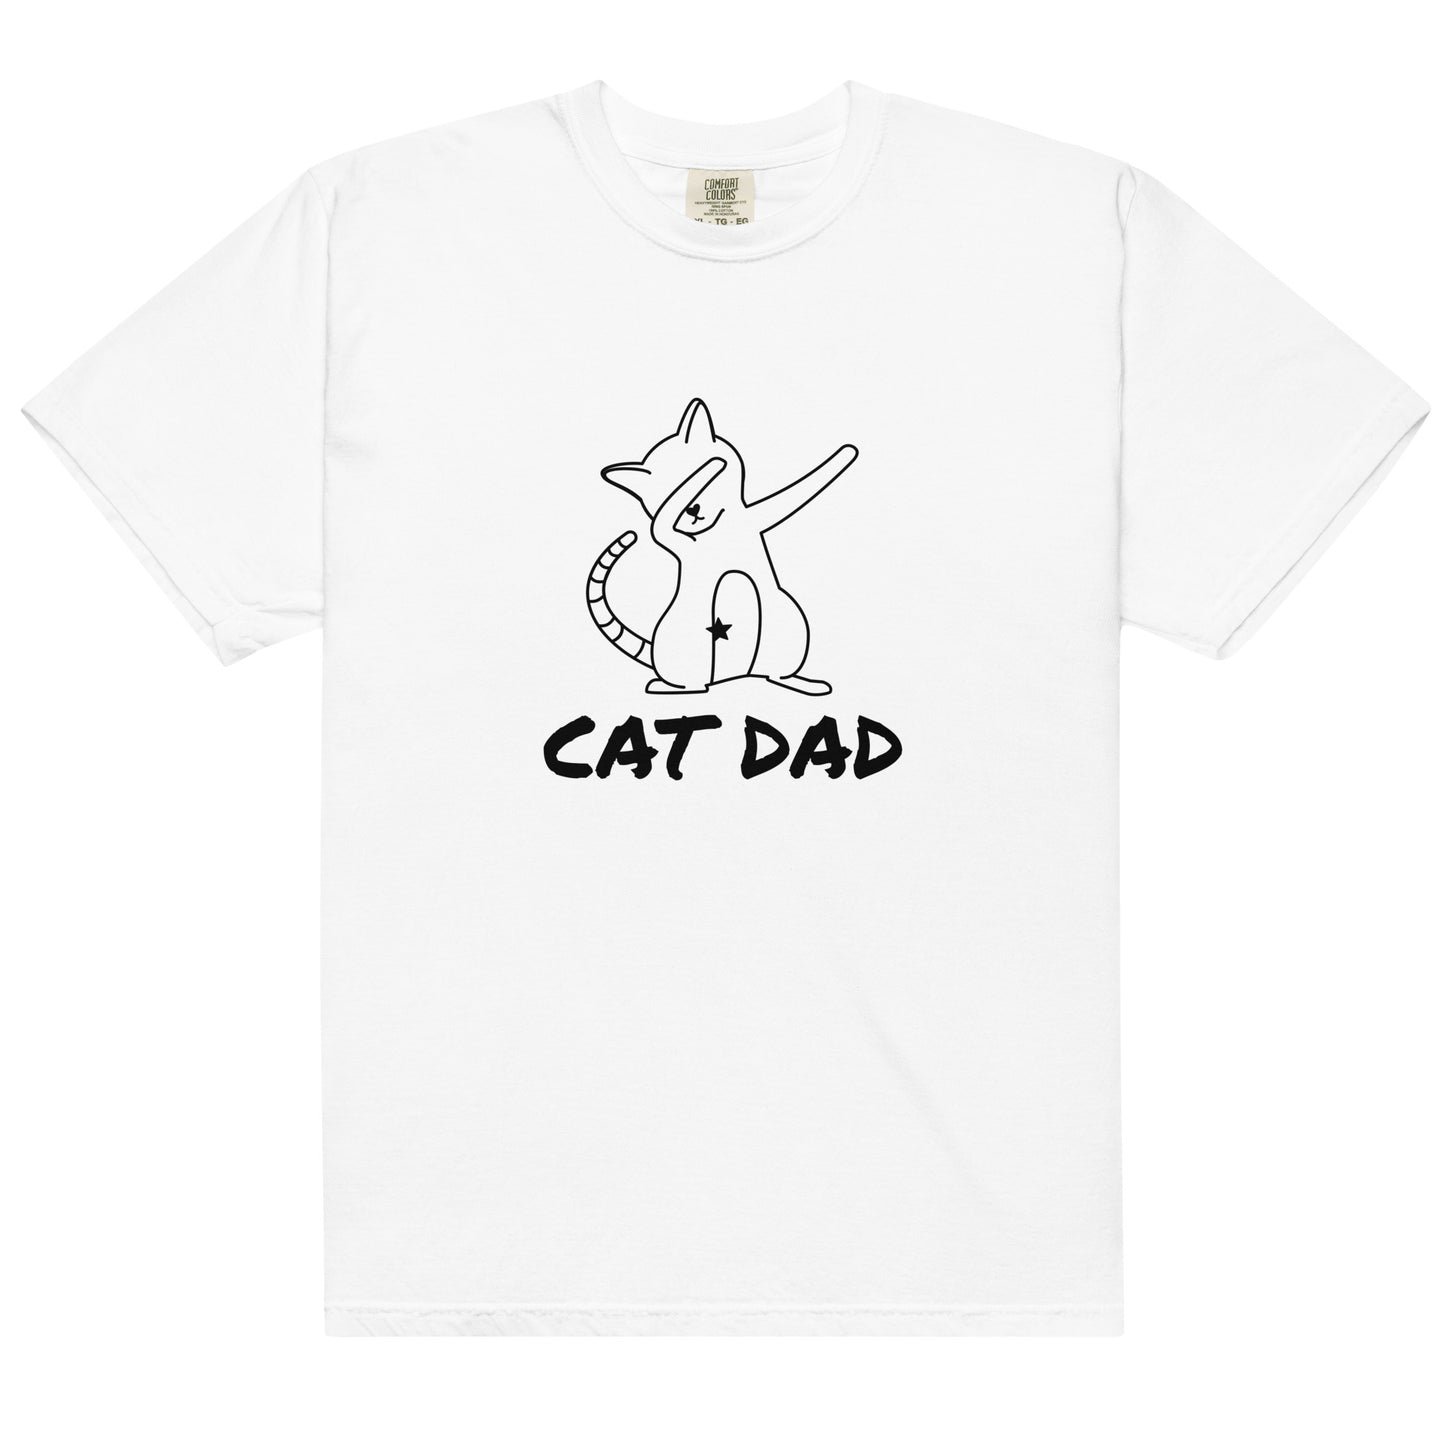 Cat Dad Printed Tshirt